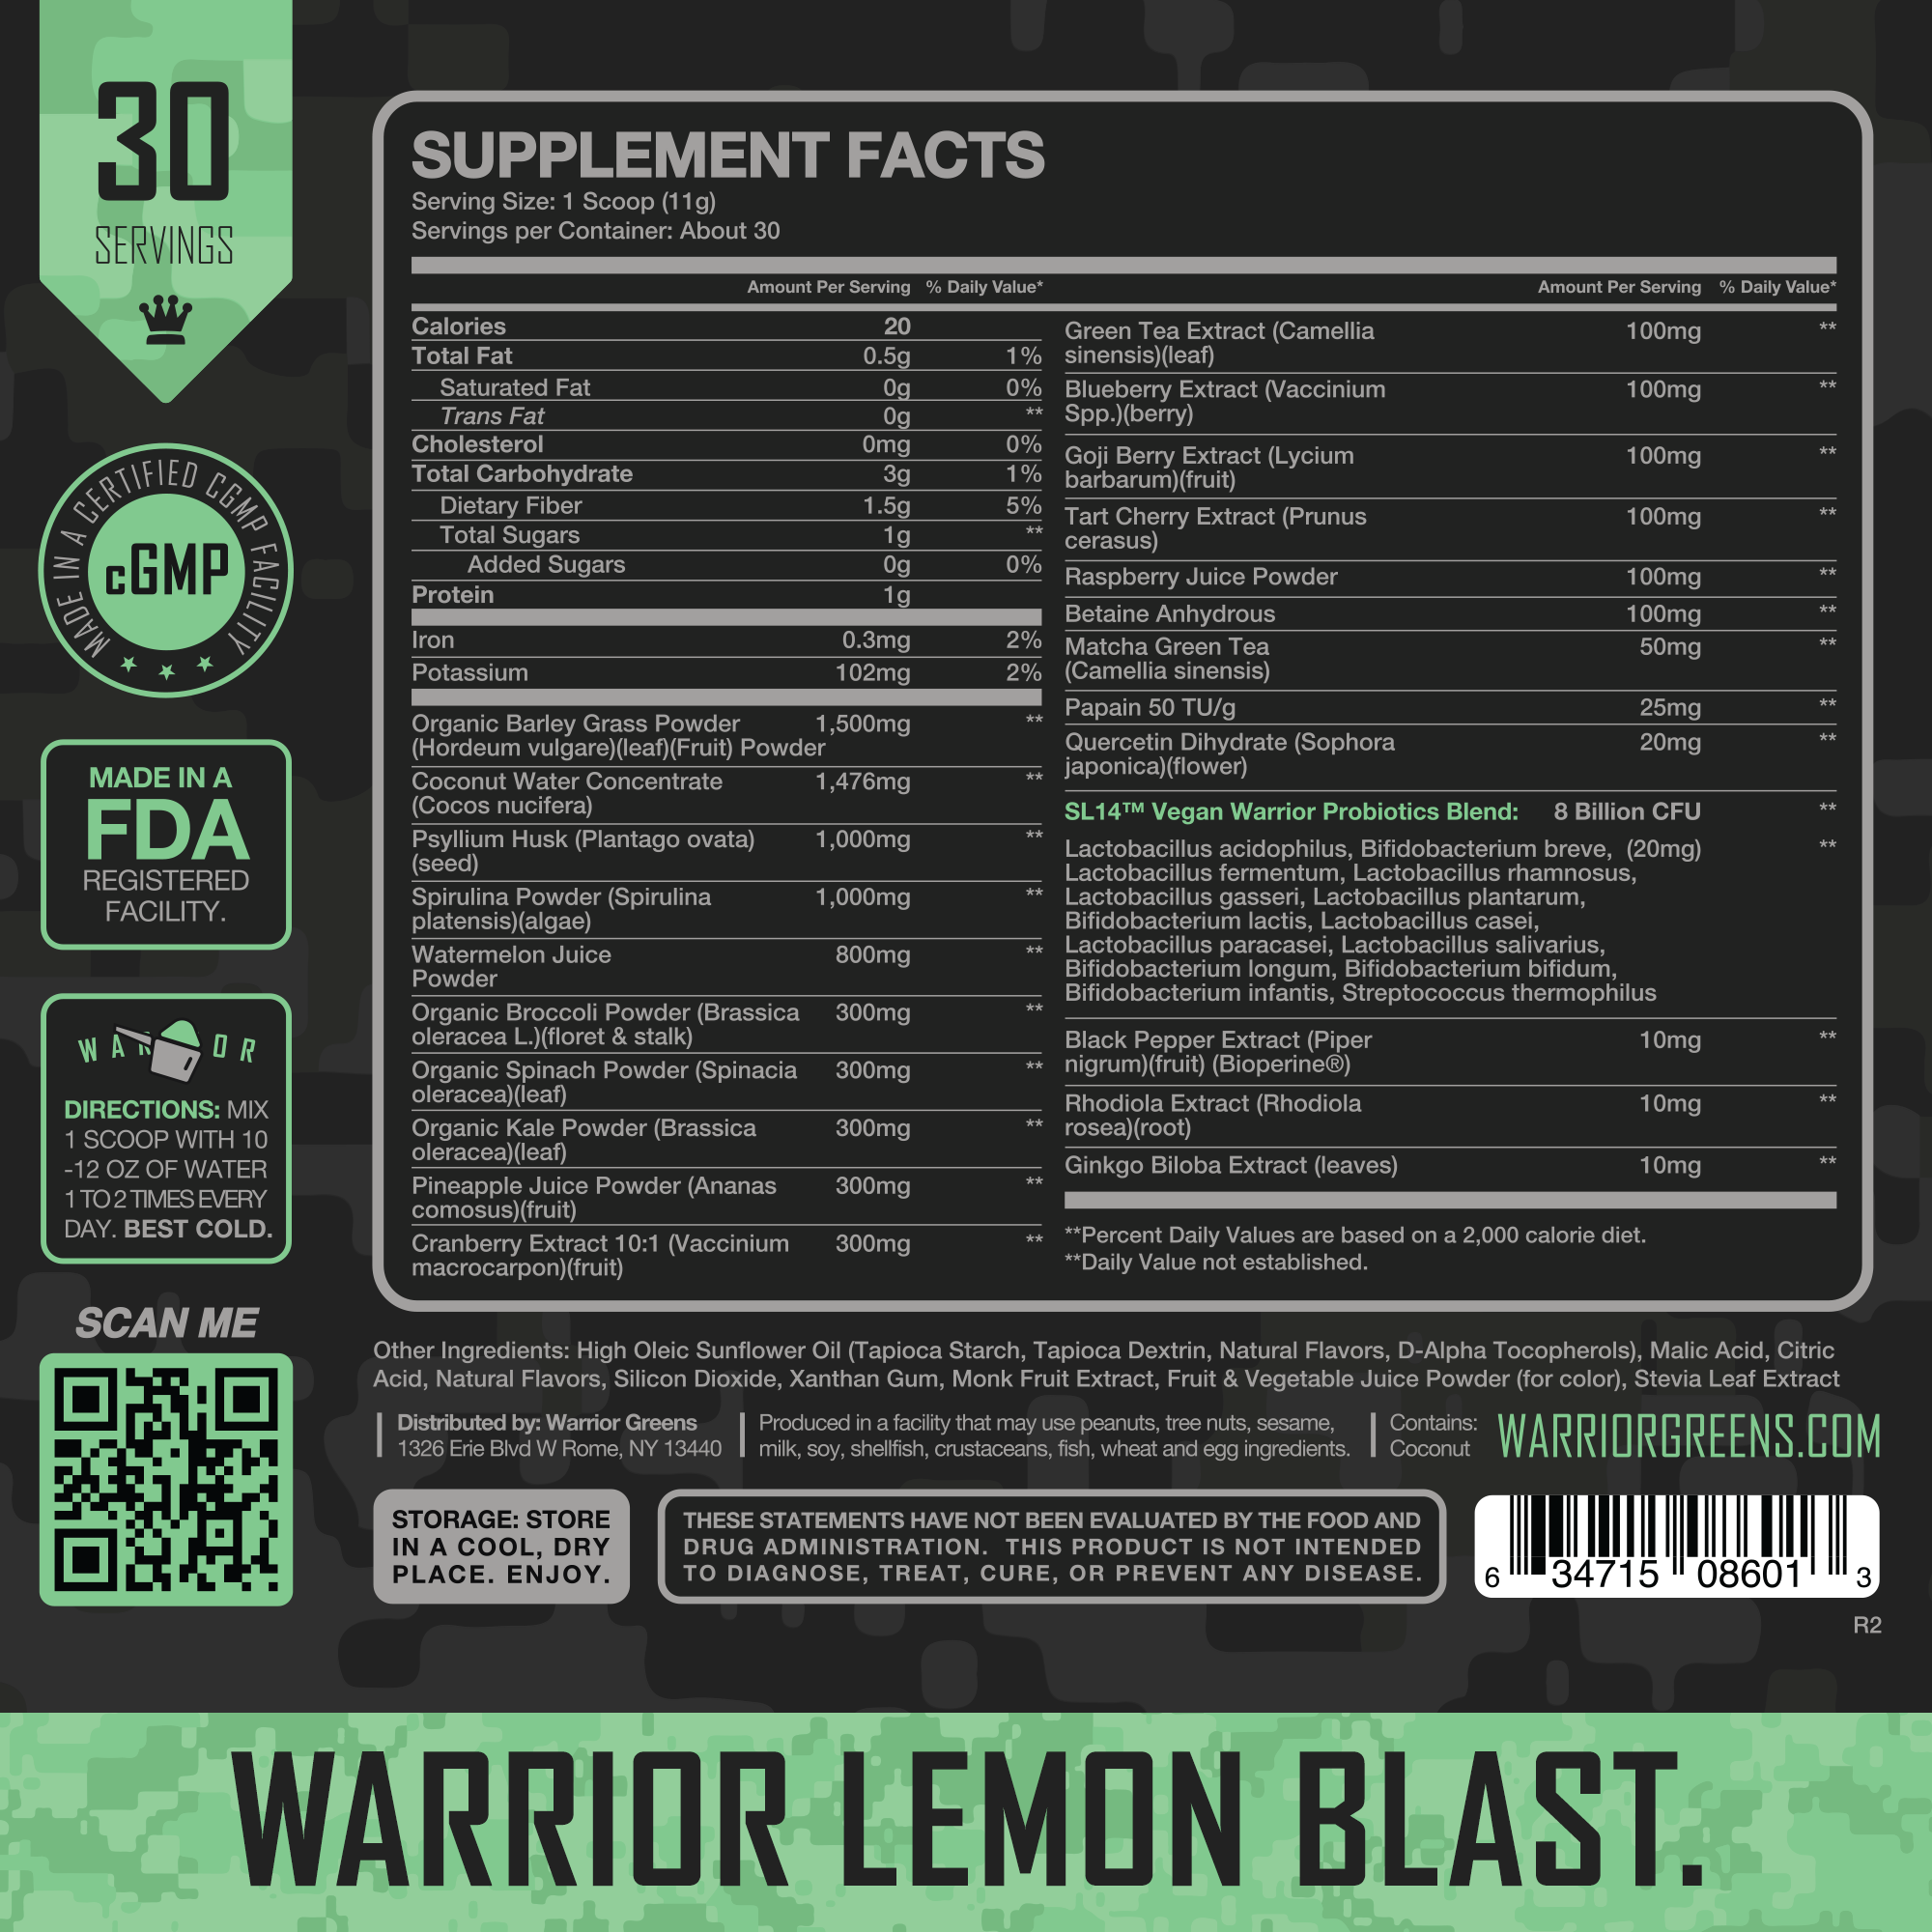 Warrior Lemon Blast!